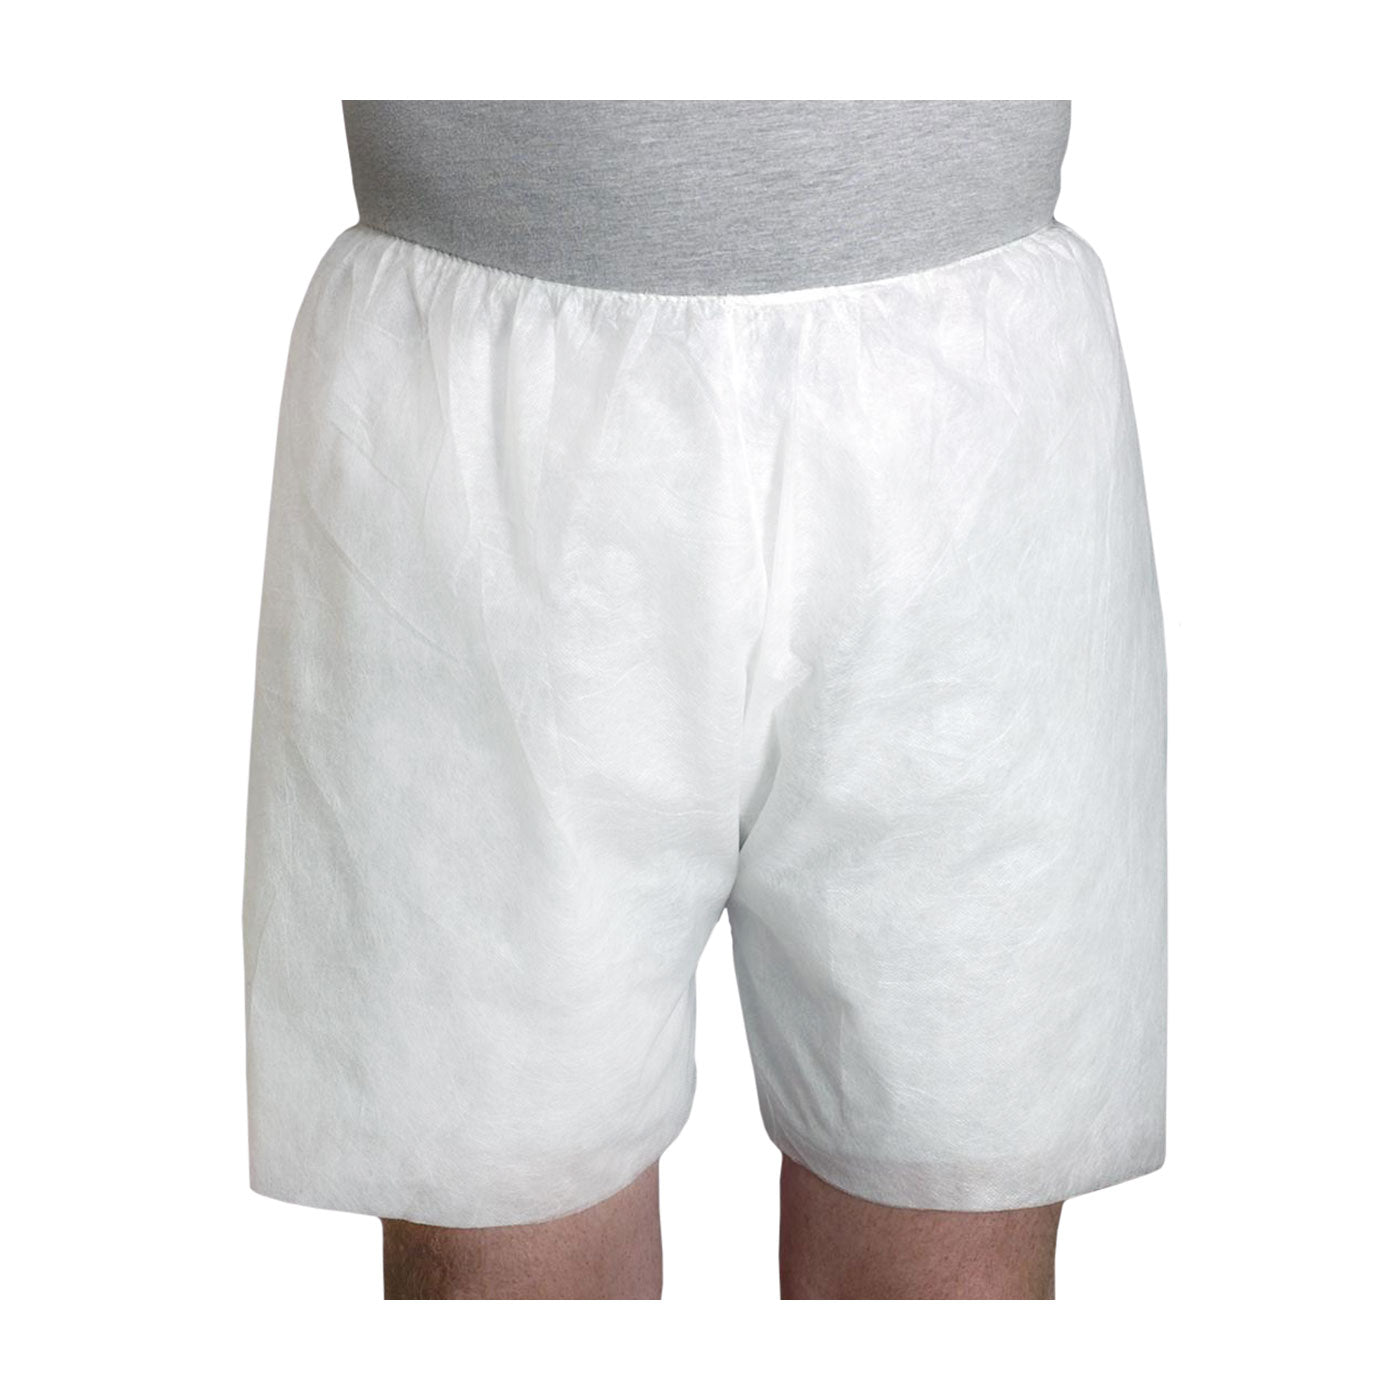 Disposable Boxer Shorts - White Disposable Underwear